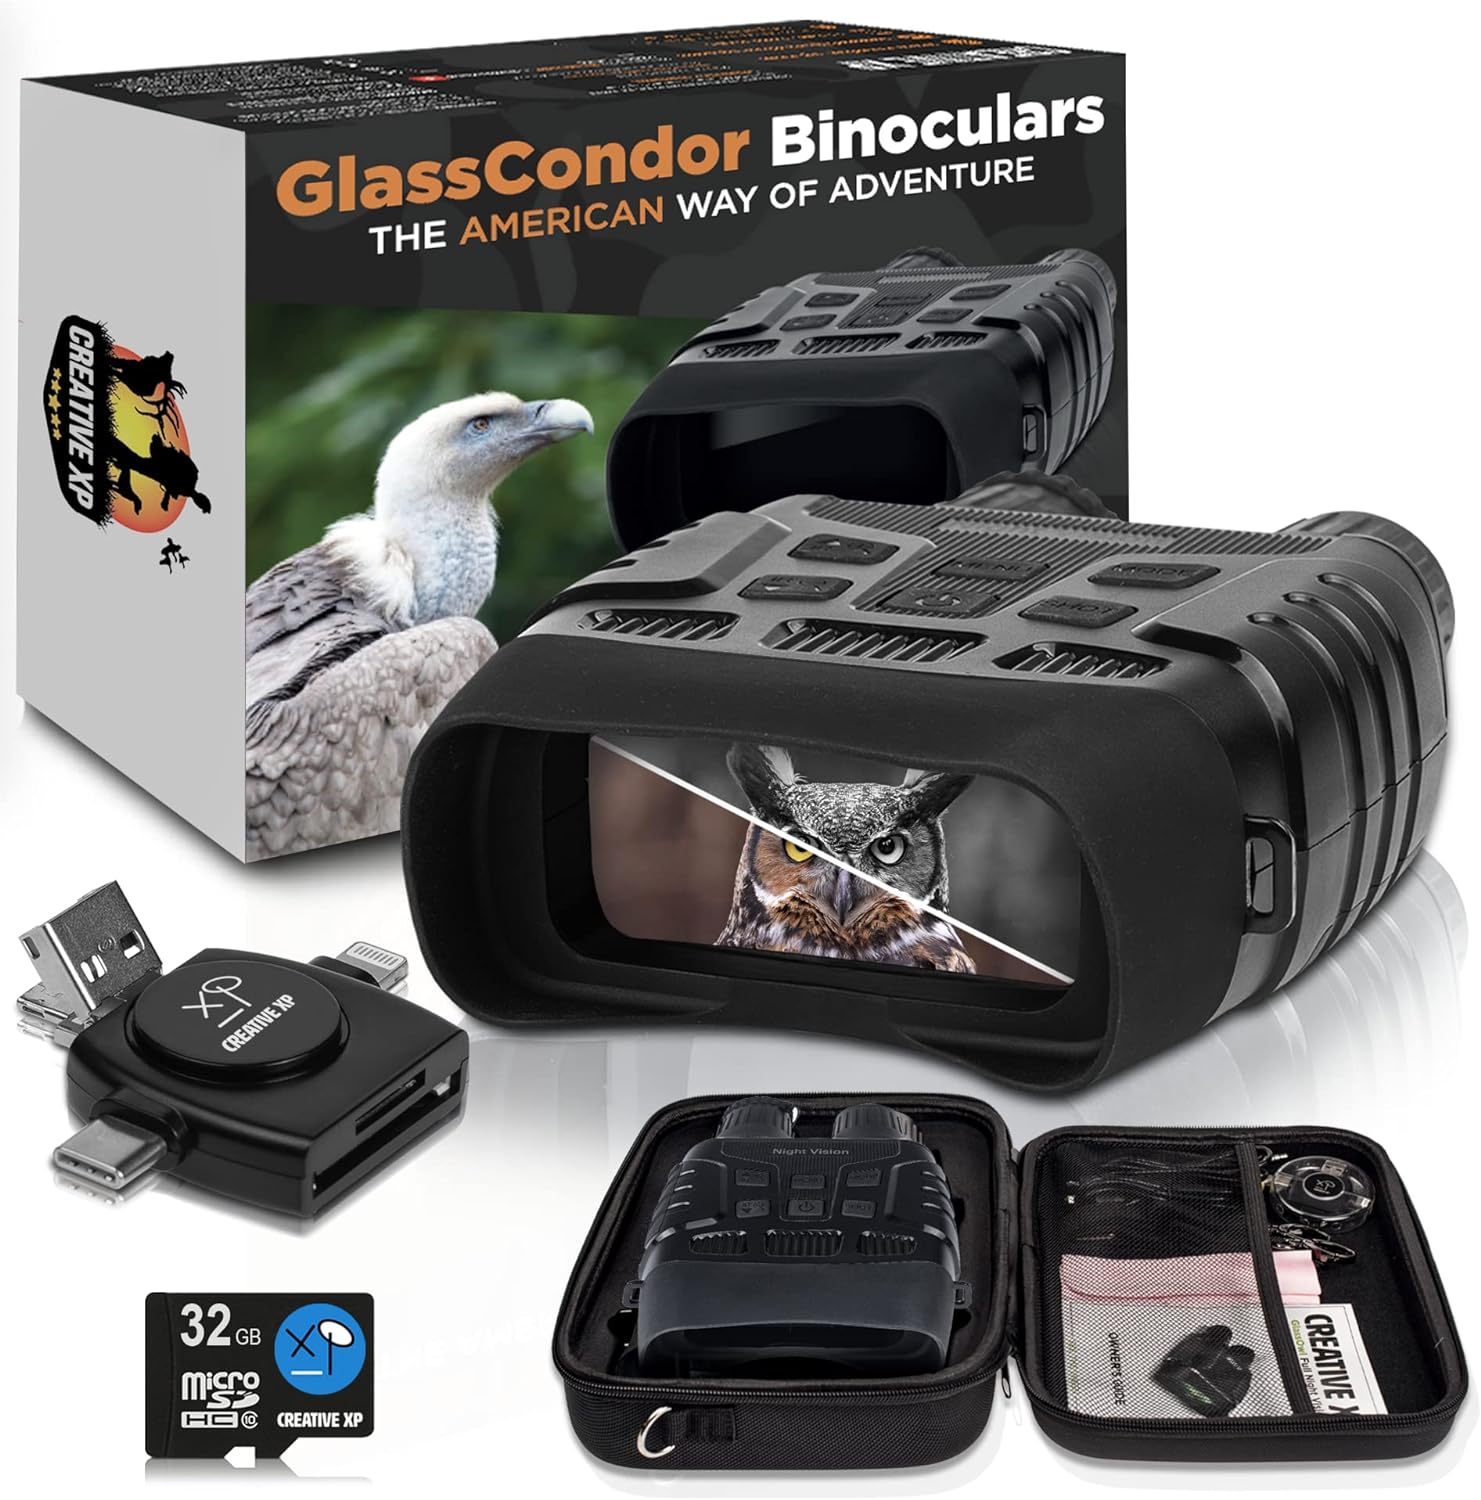 CREATIVE XP Night Vision Goggles - Military Grade, Digital Infrared Binoculars - Deer Hunting Accessories, Tactical Gear W/ 32GB, SD Card Reader, 6 AA Batteries, High-Performance Optics, Armor Body